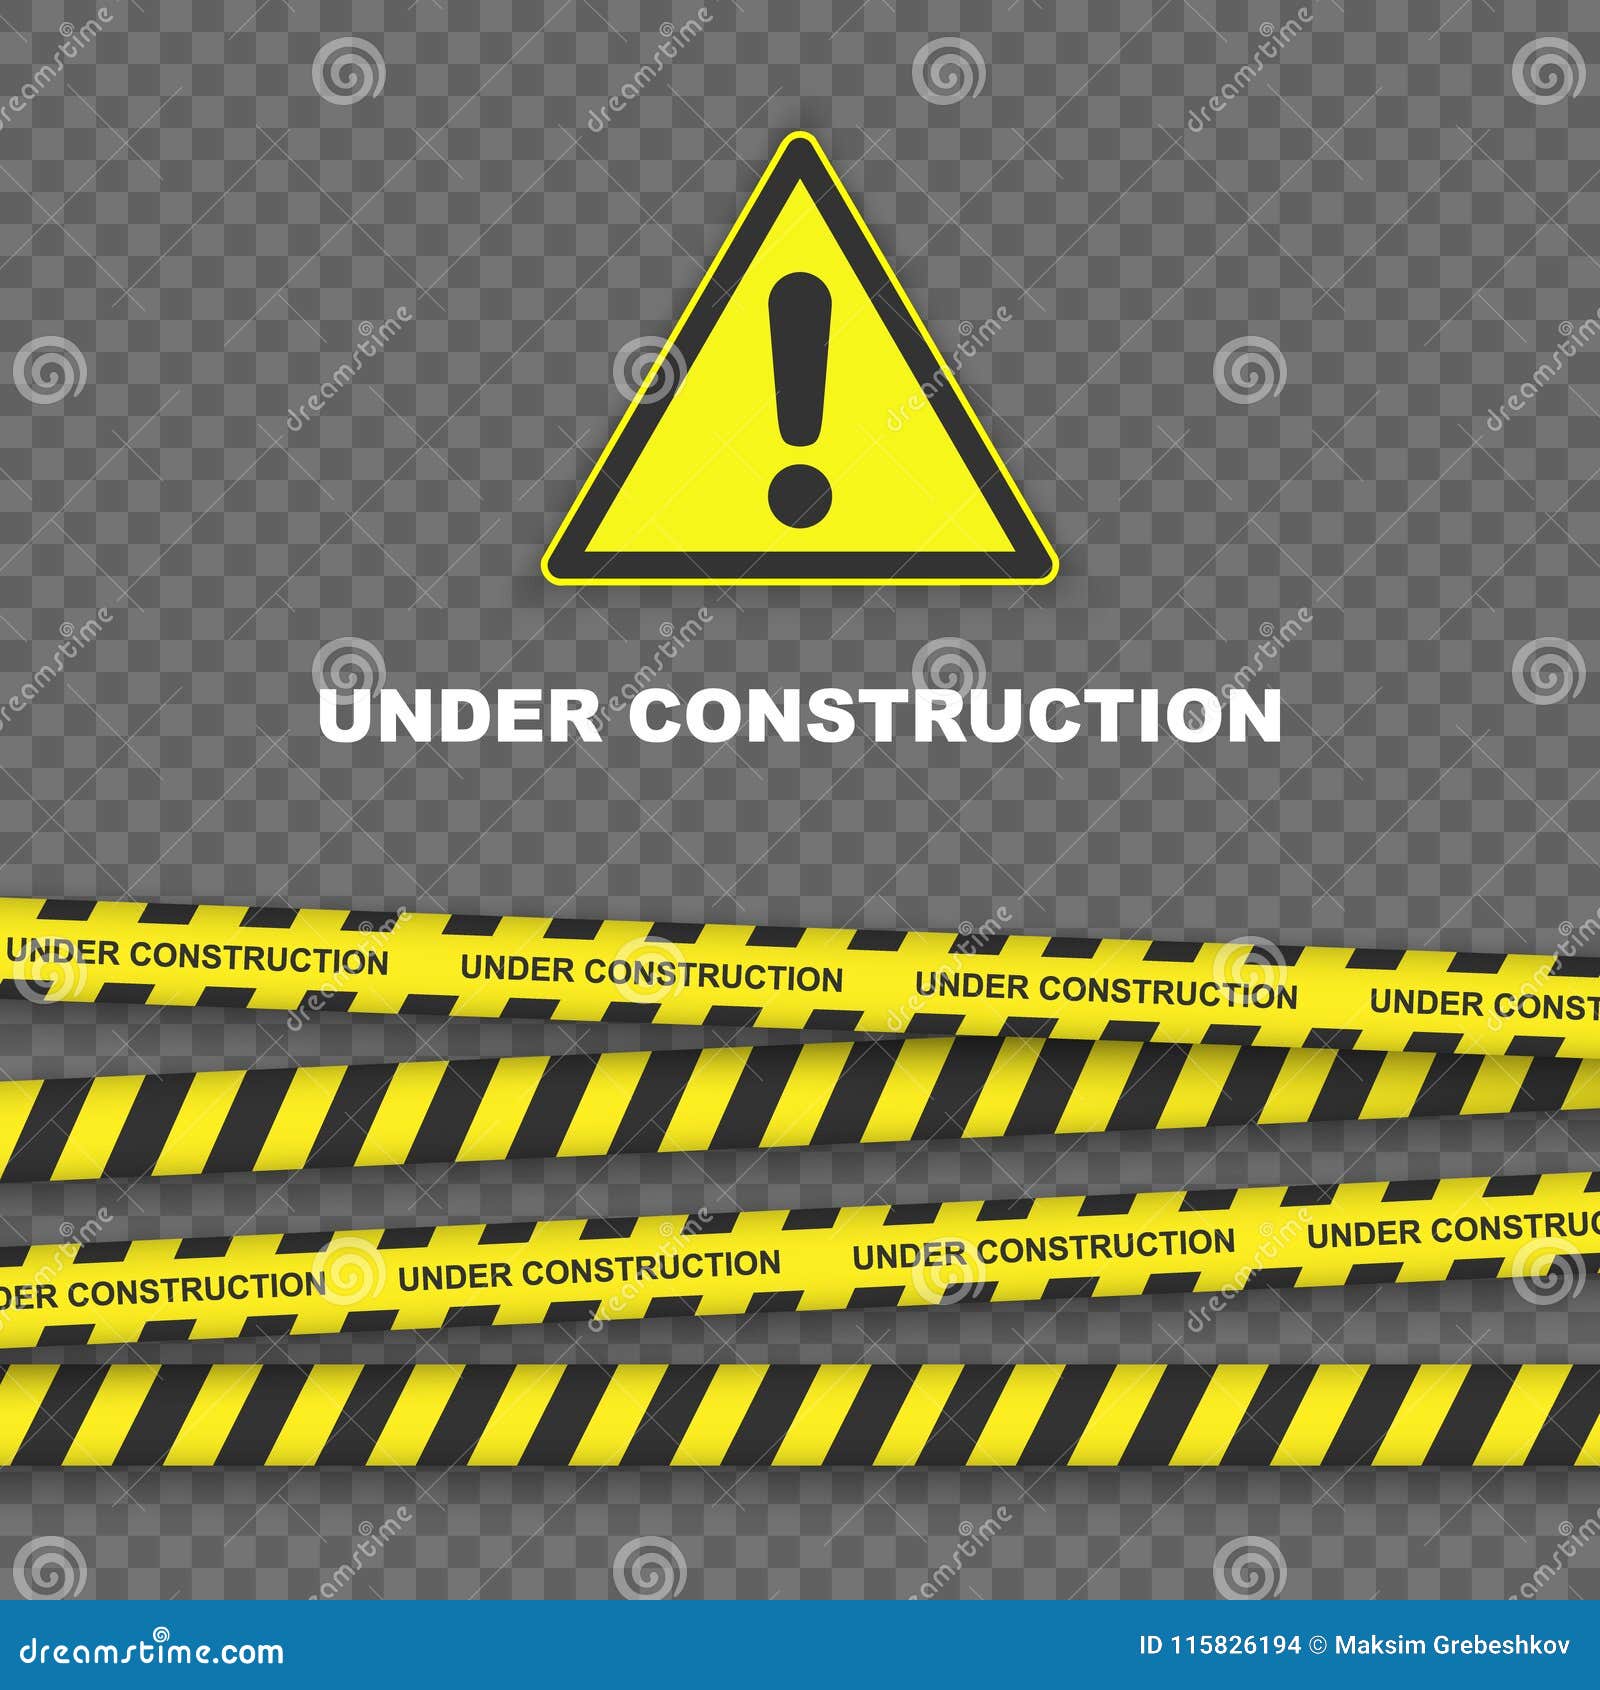 Under Construction Background Stock Vector - Illustration of design ...